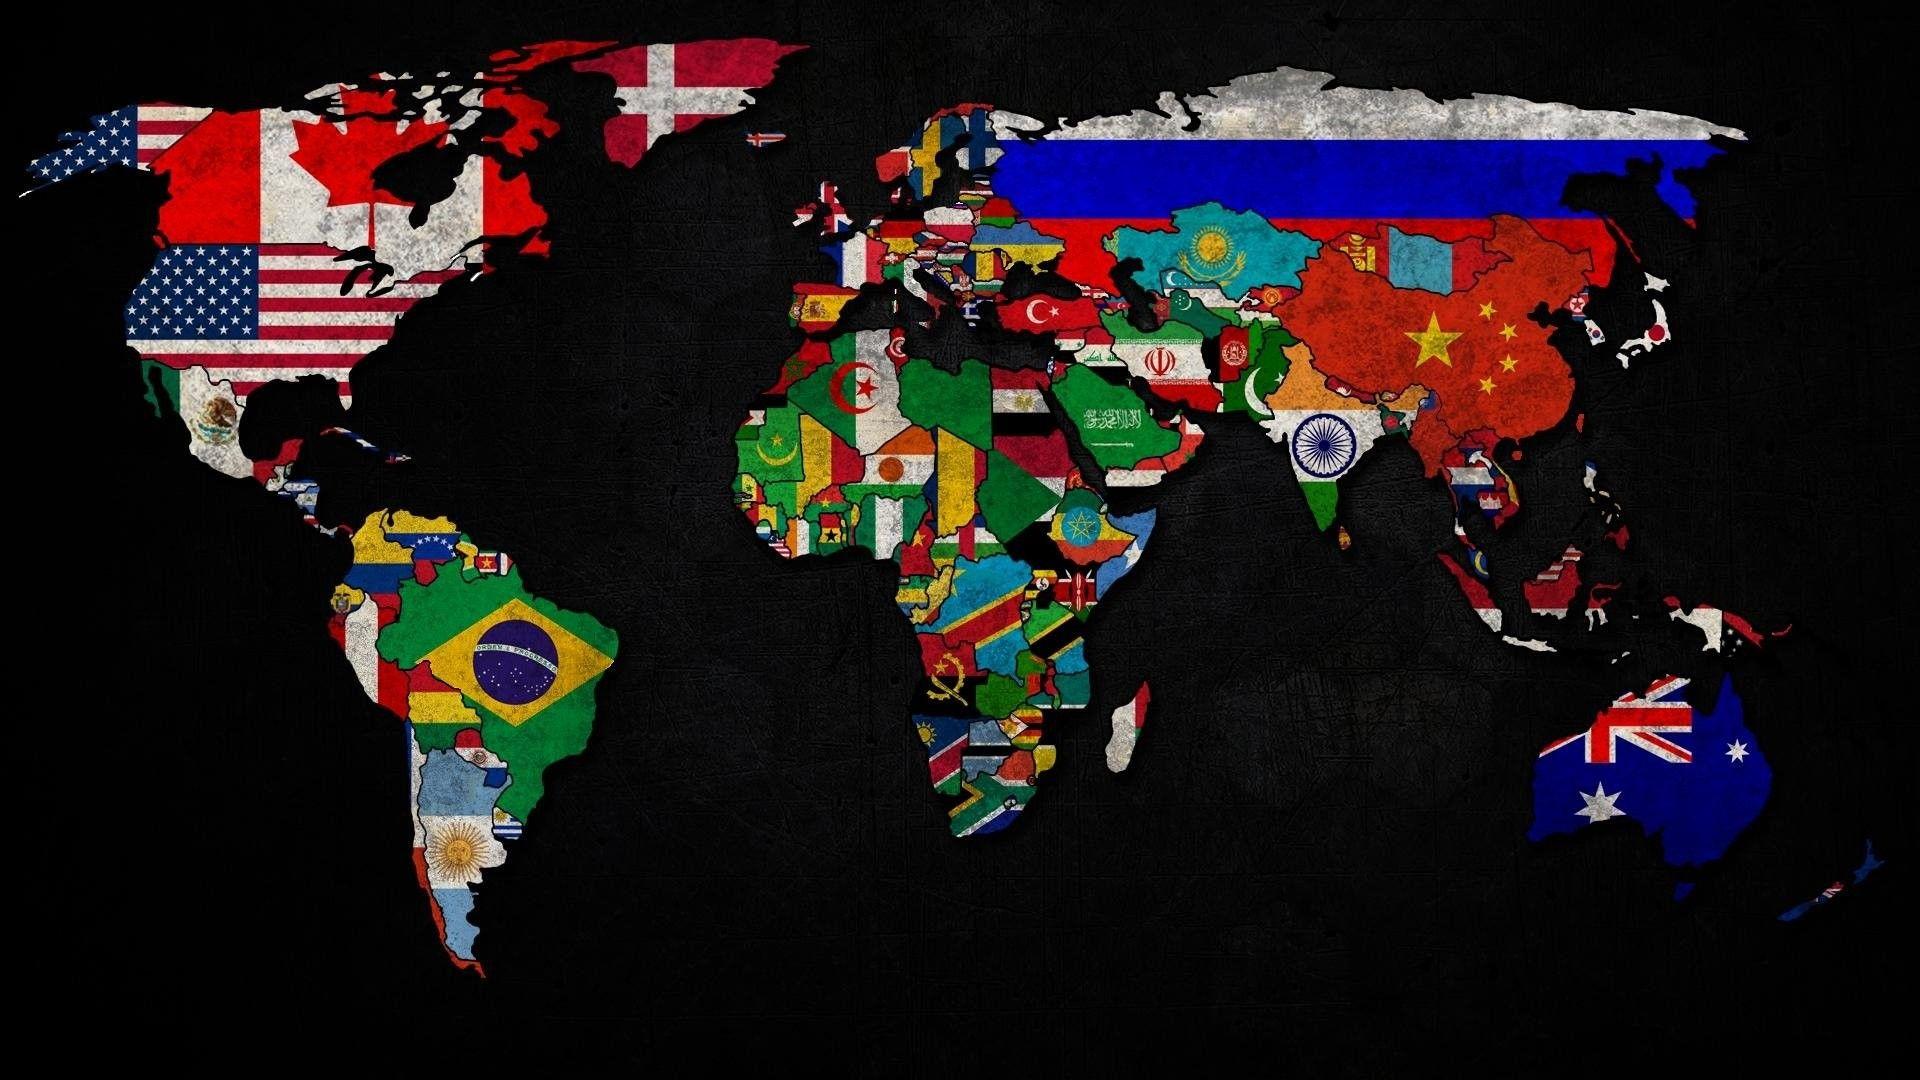 World Map wallpaperDownload free amazing background